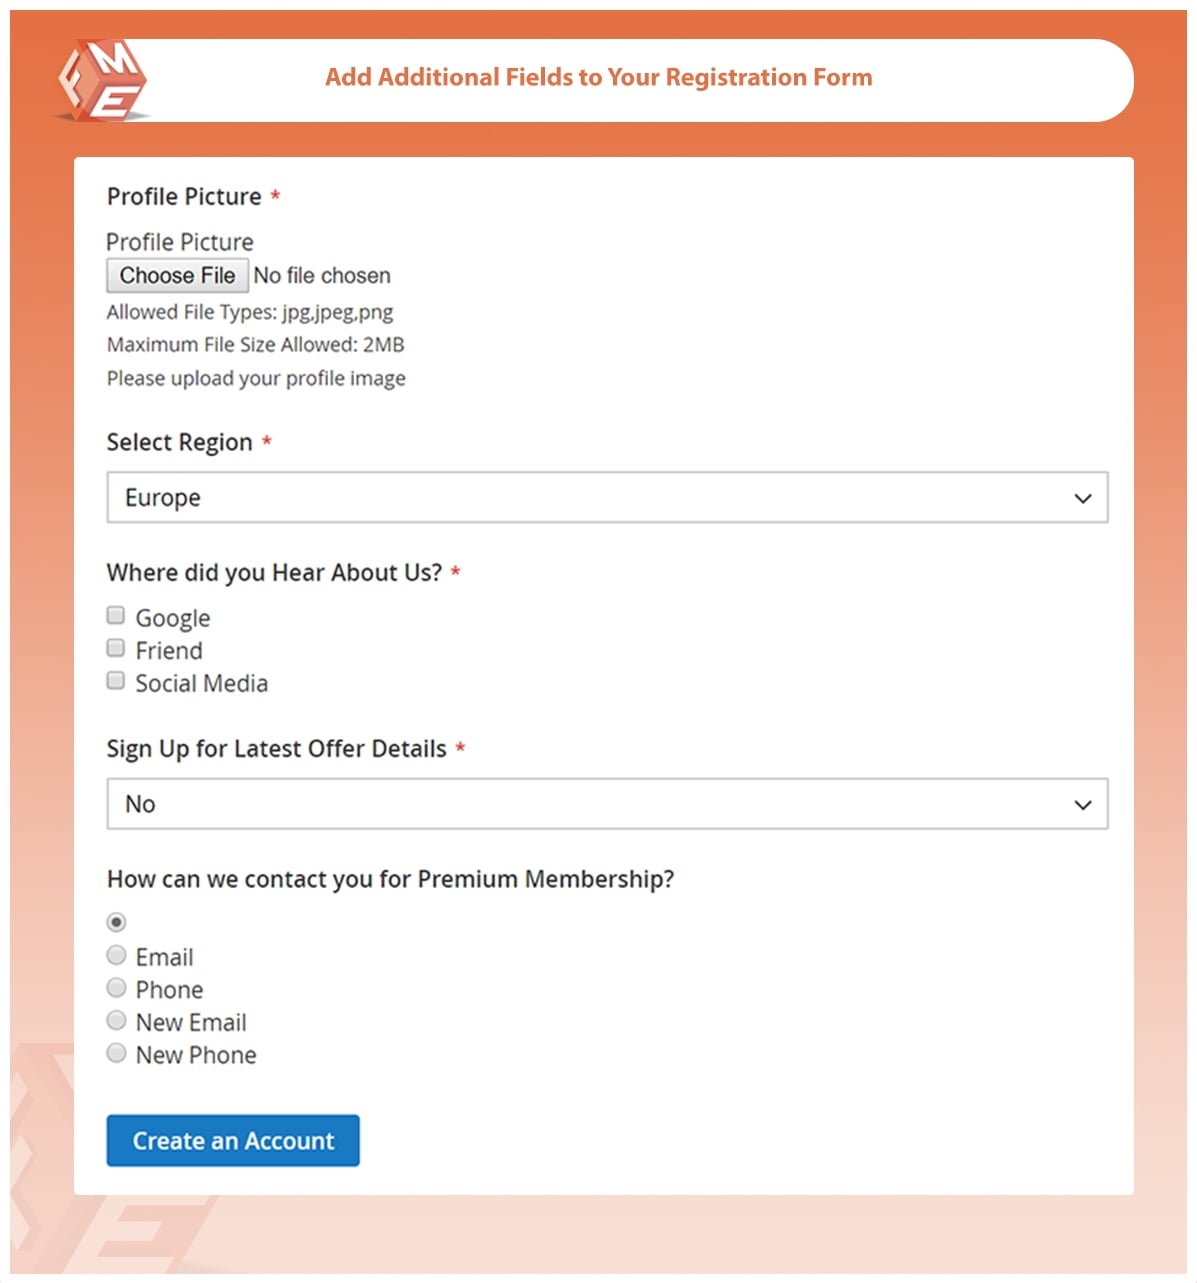 Add Customer Attributes to Registration Form